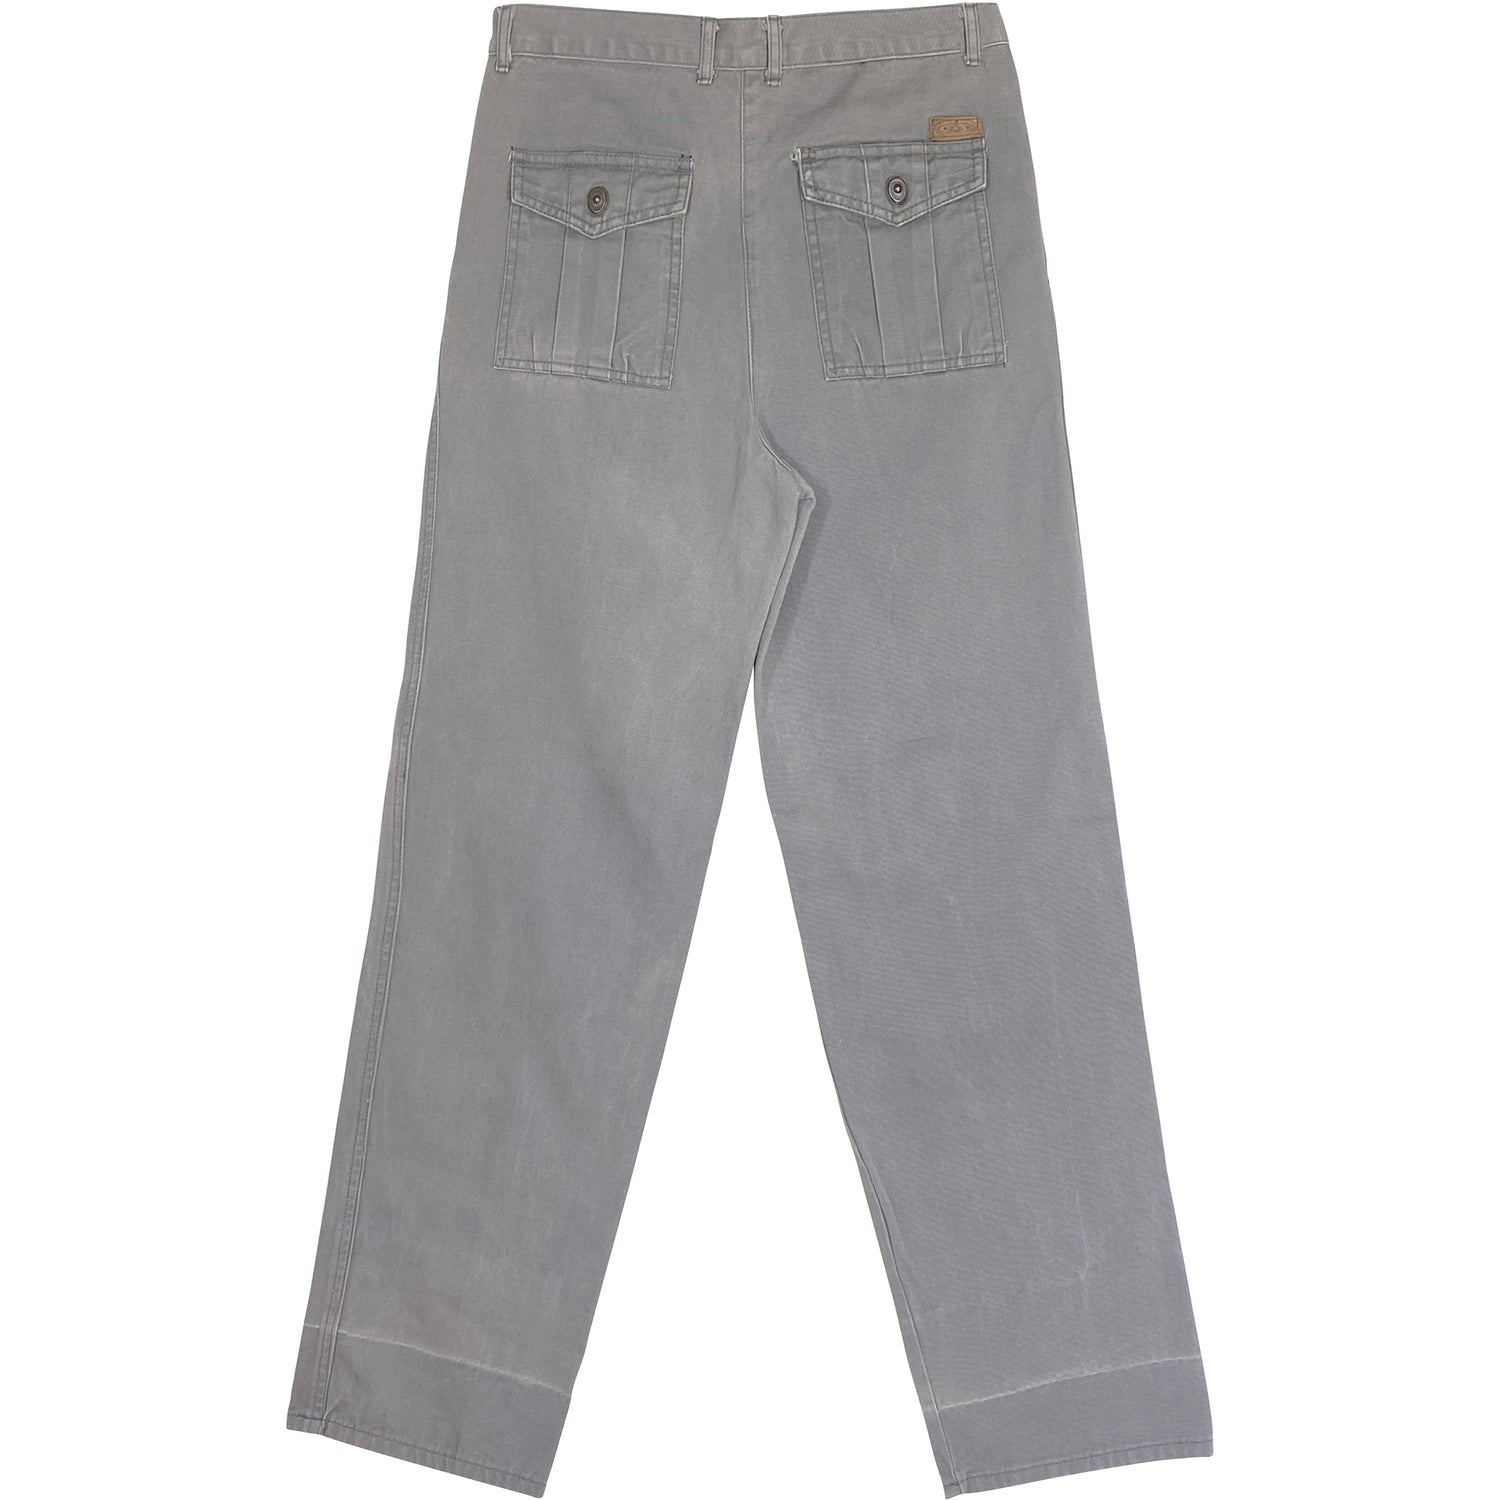 Vintage Cotler Pants - Size 28